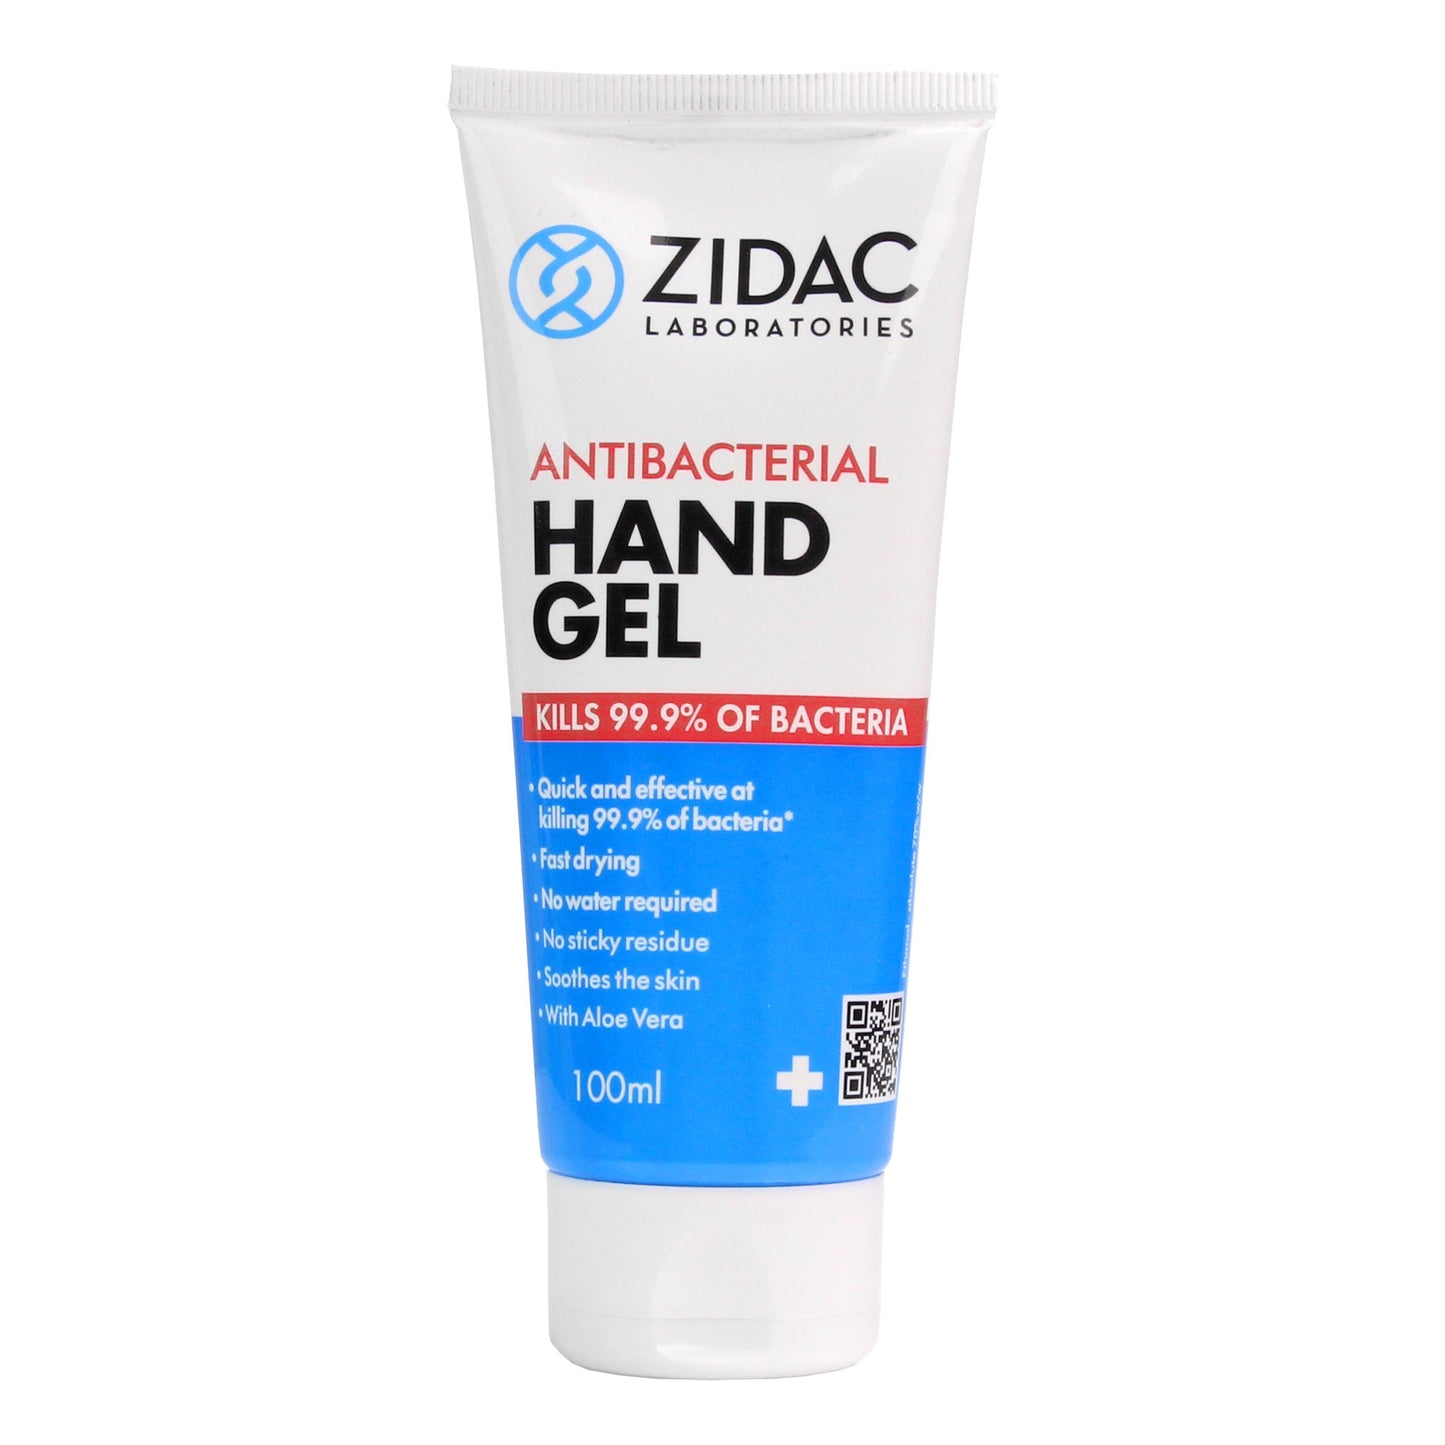 Zidac 70% Alcohol Hand Gel - 100ml Tube - Hospital Grade